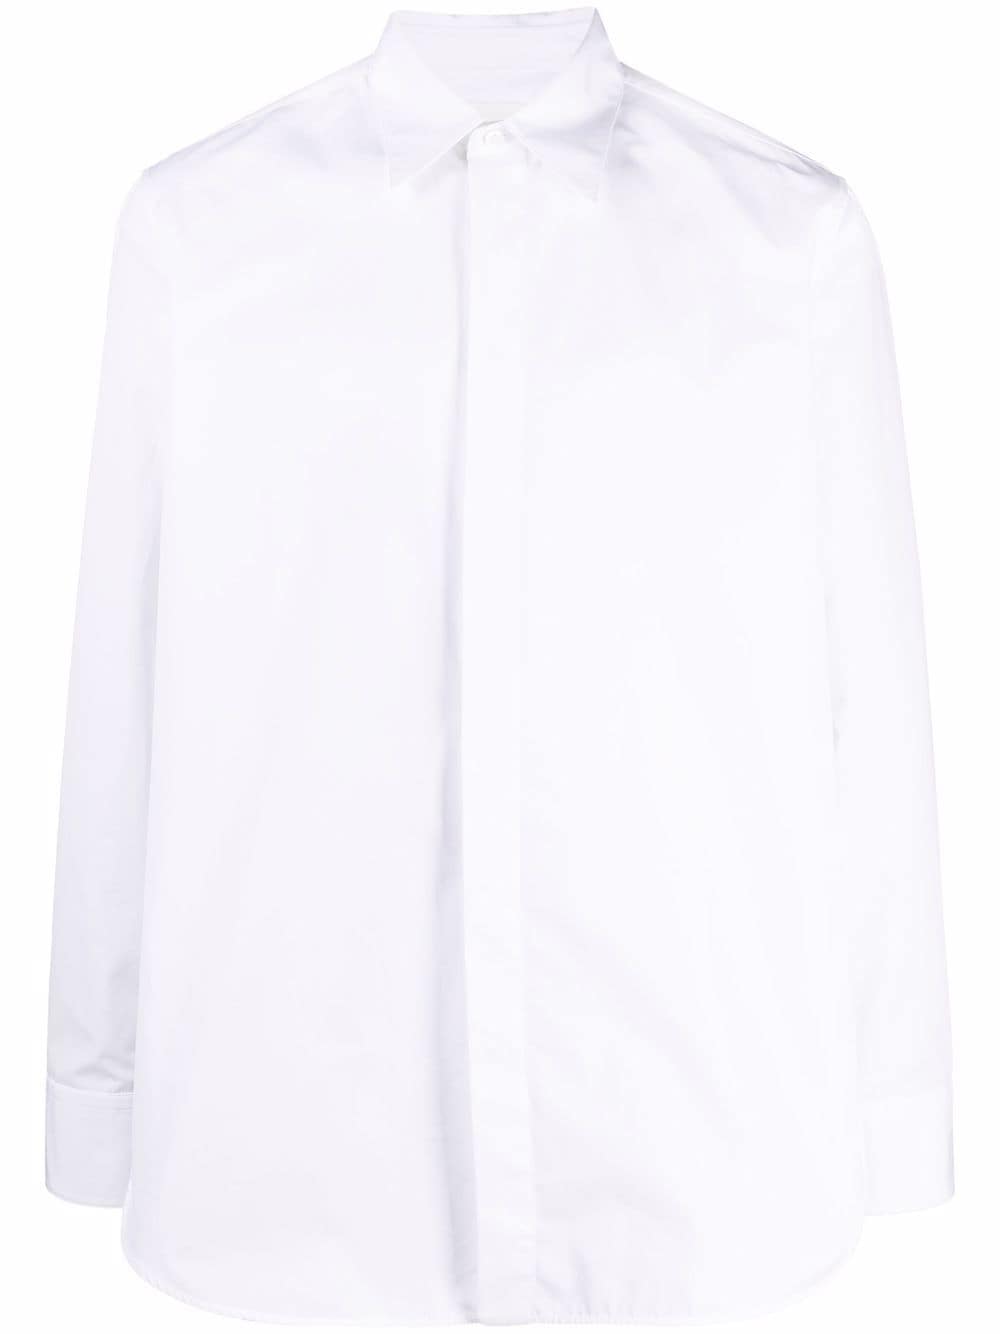 Jil Sander long-sleeved white shirt von Jil Sander